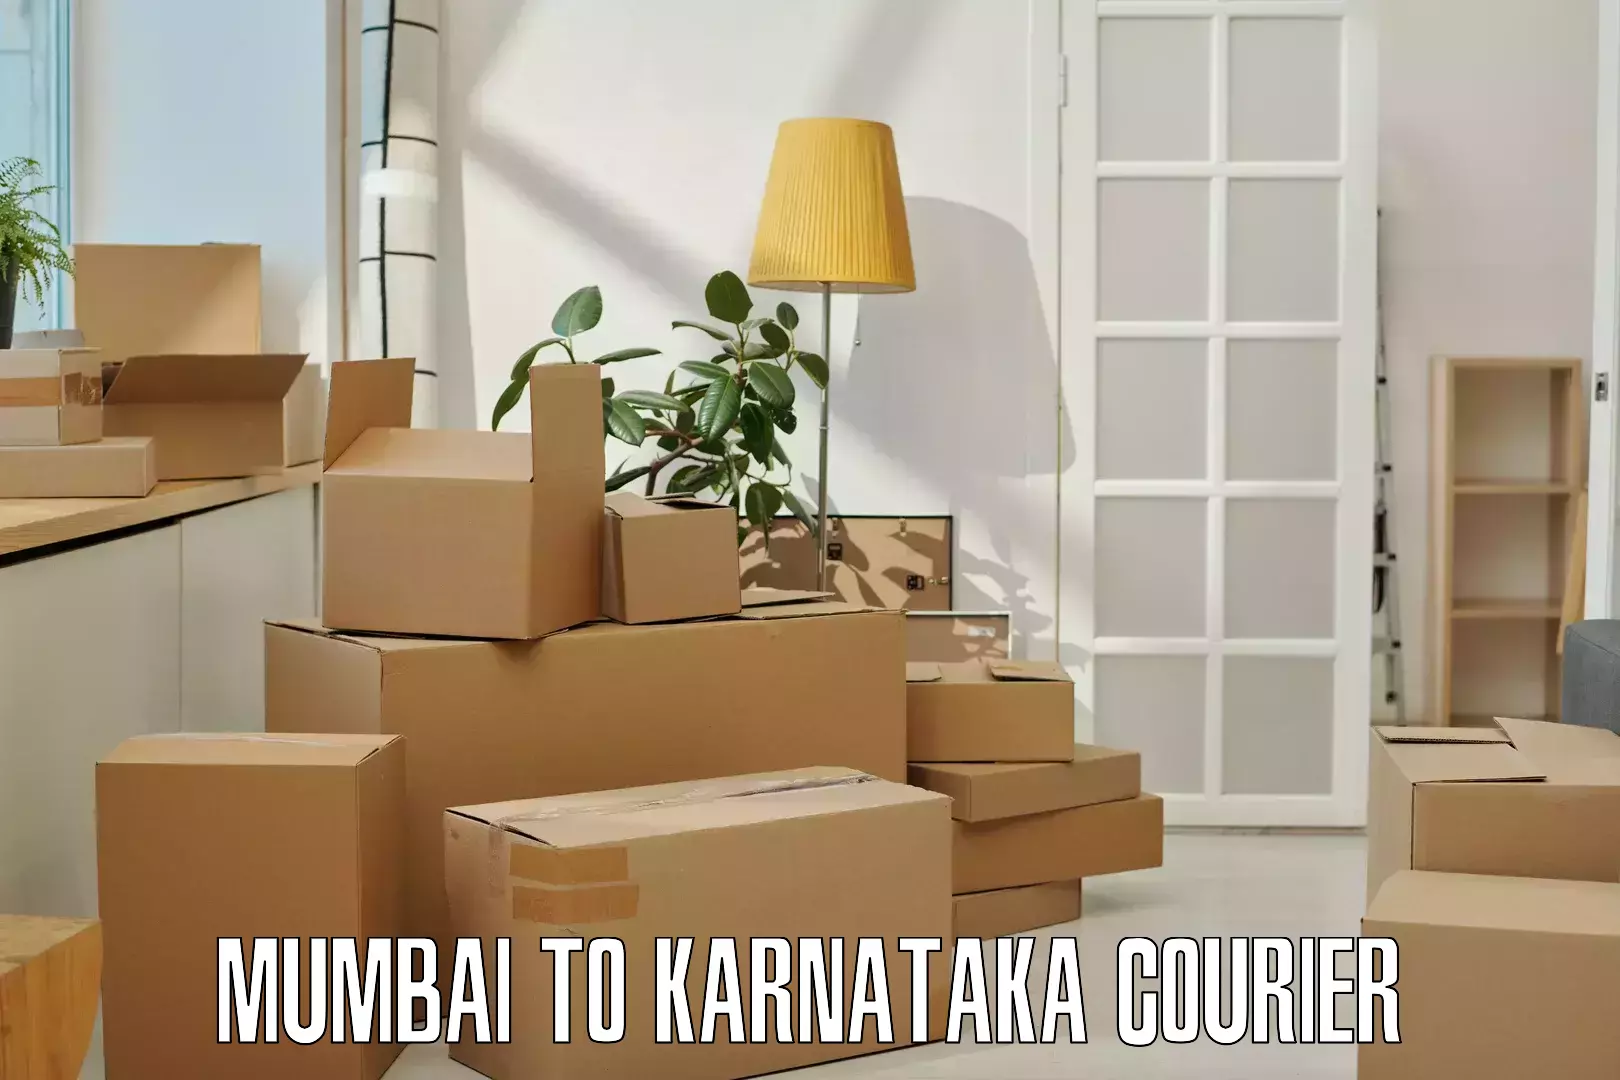 State-of-the-art courier technology Mumbai to Hosanagar